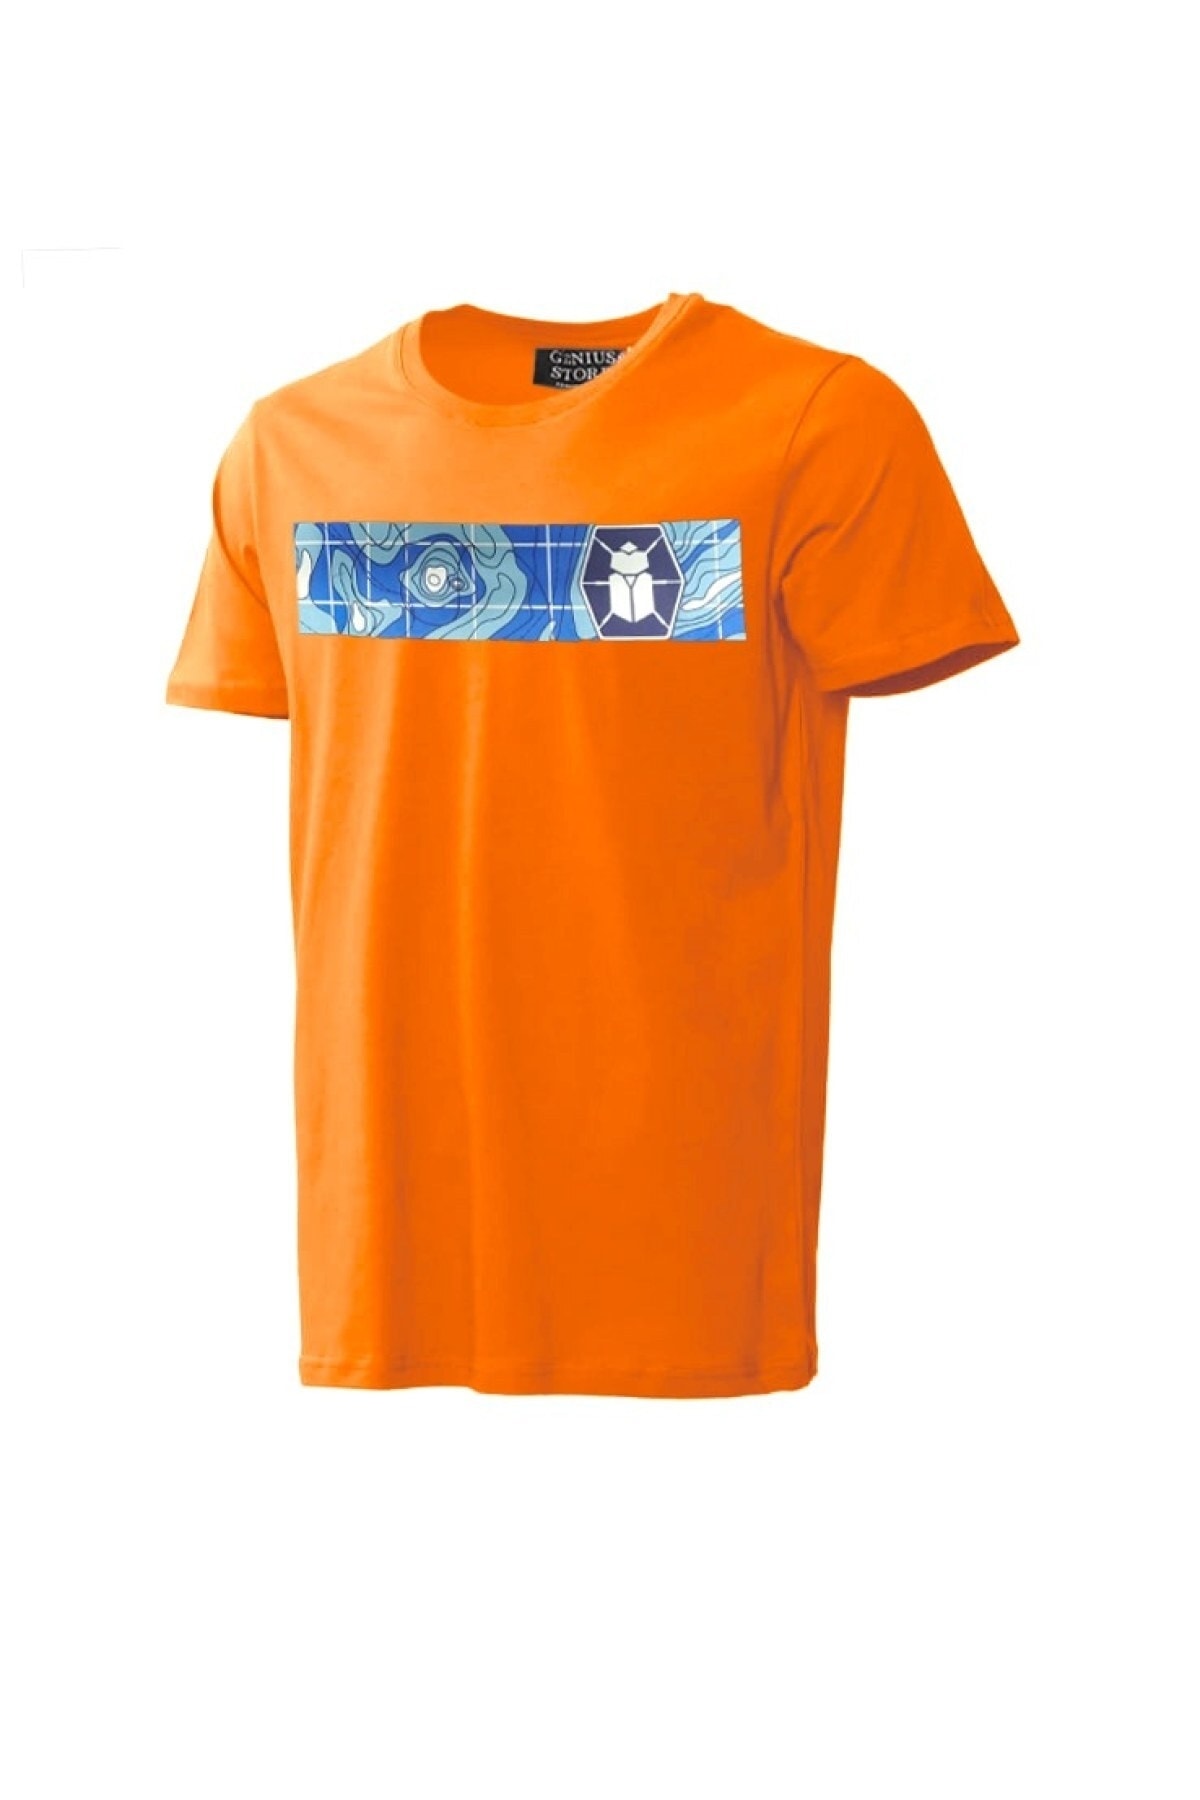 GENIUS Store Unisex Baskılı Tişört Outdoor Normal Kalıp Spor Tshirt